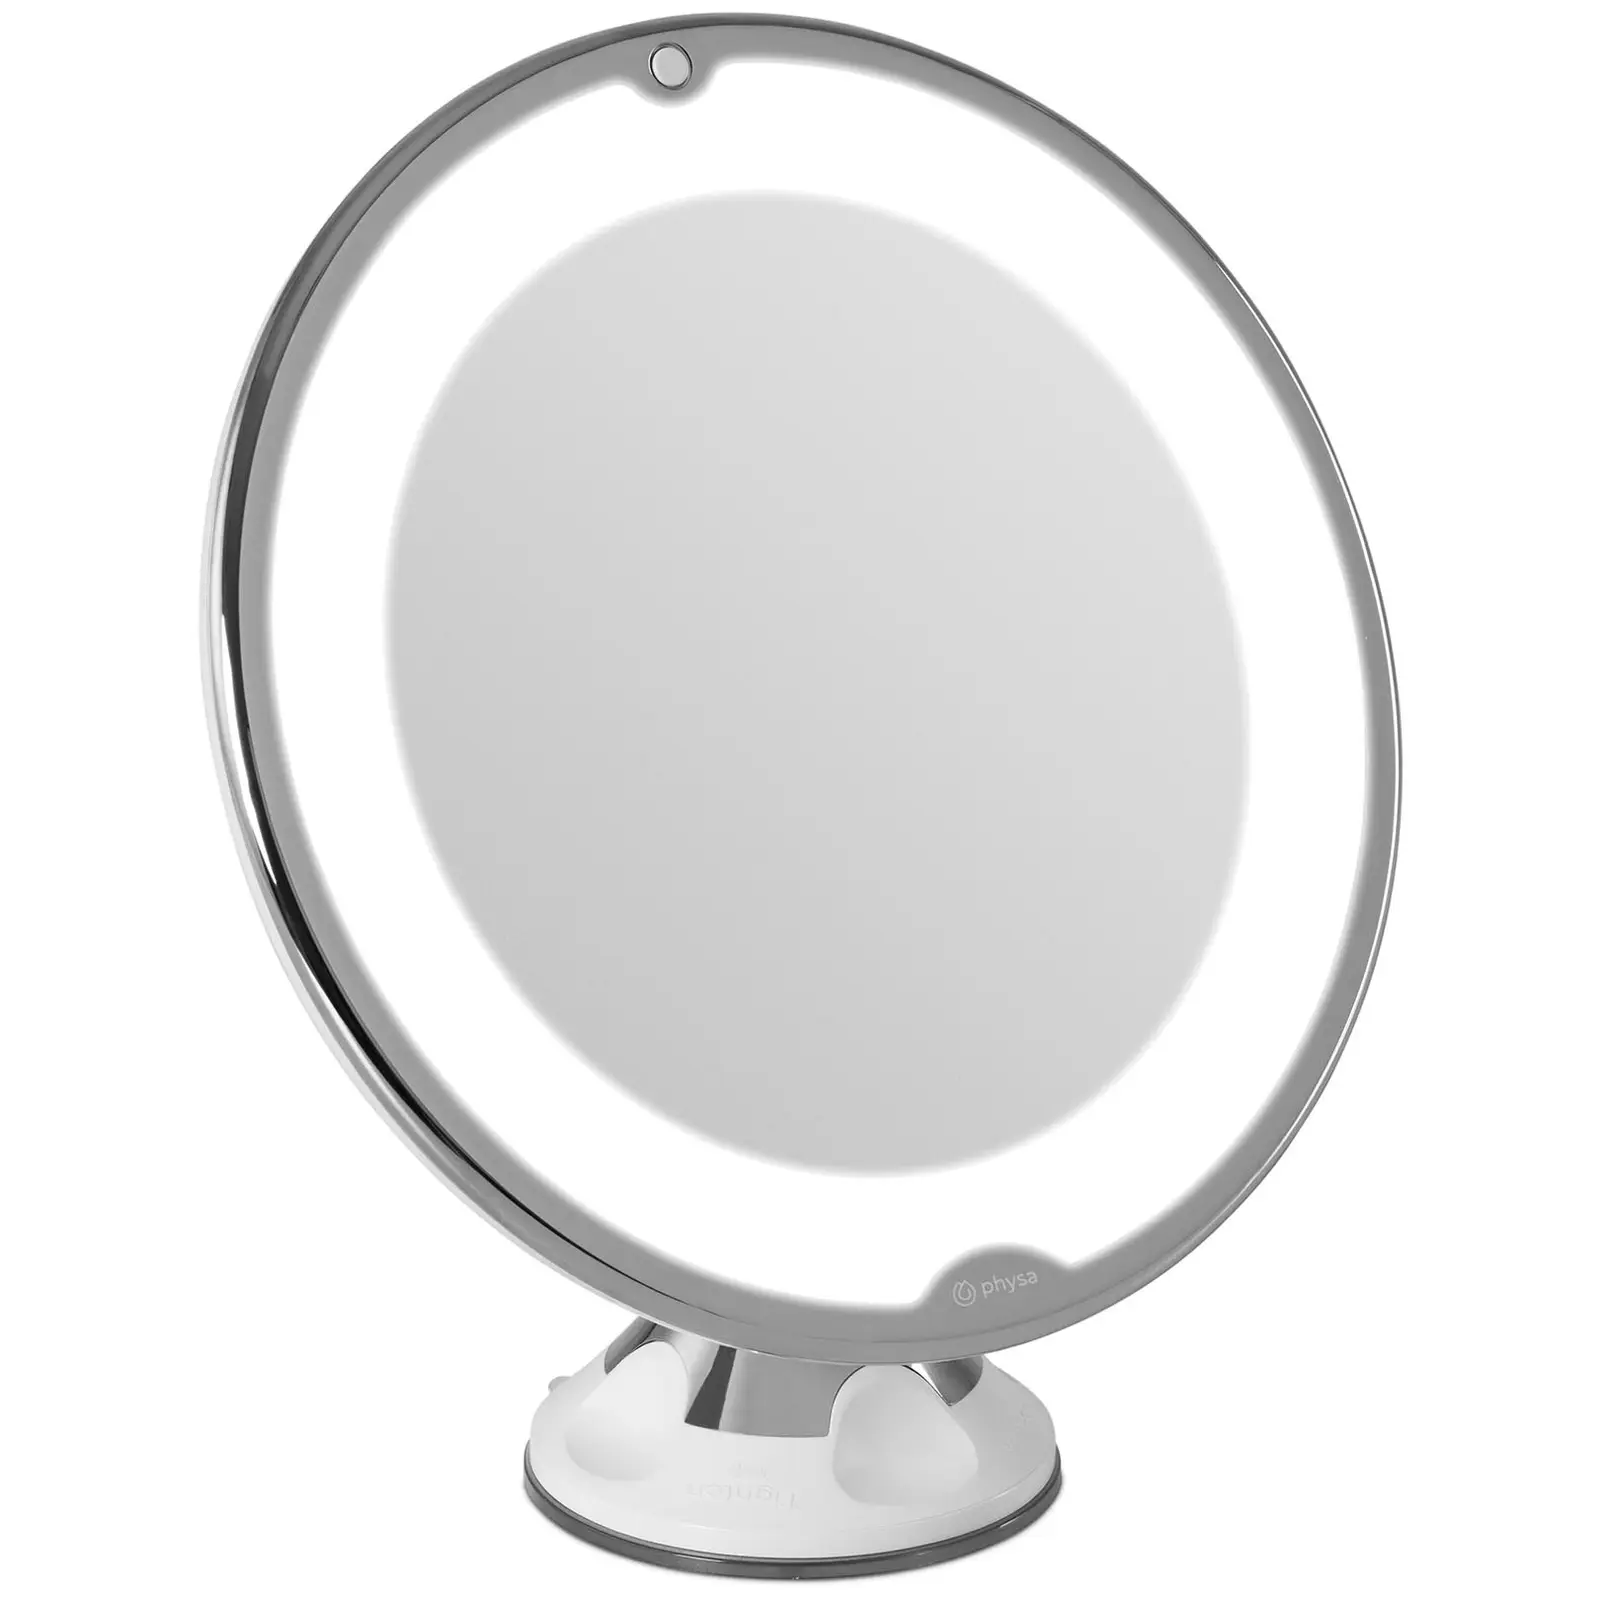 Make-up spiegel met verlichting - wit - 10x vergroting - 10 LED's - rond